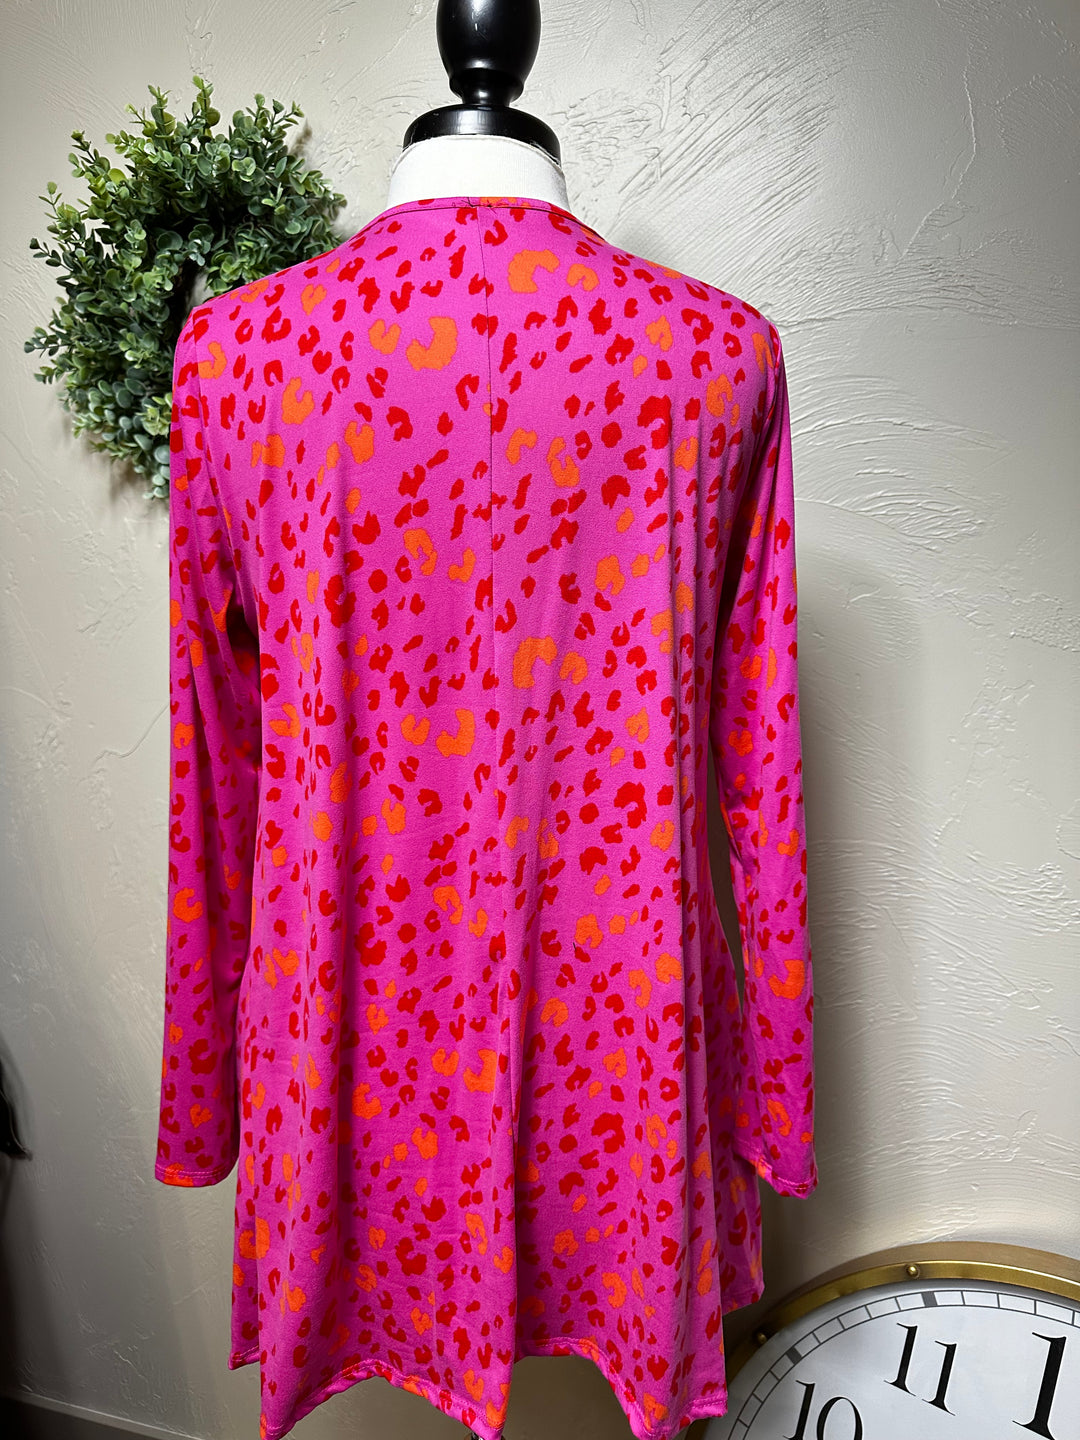 Women's Bright Pink With Animal Print Handkerchief Tunic Top w/ pockets